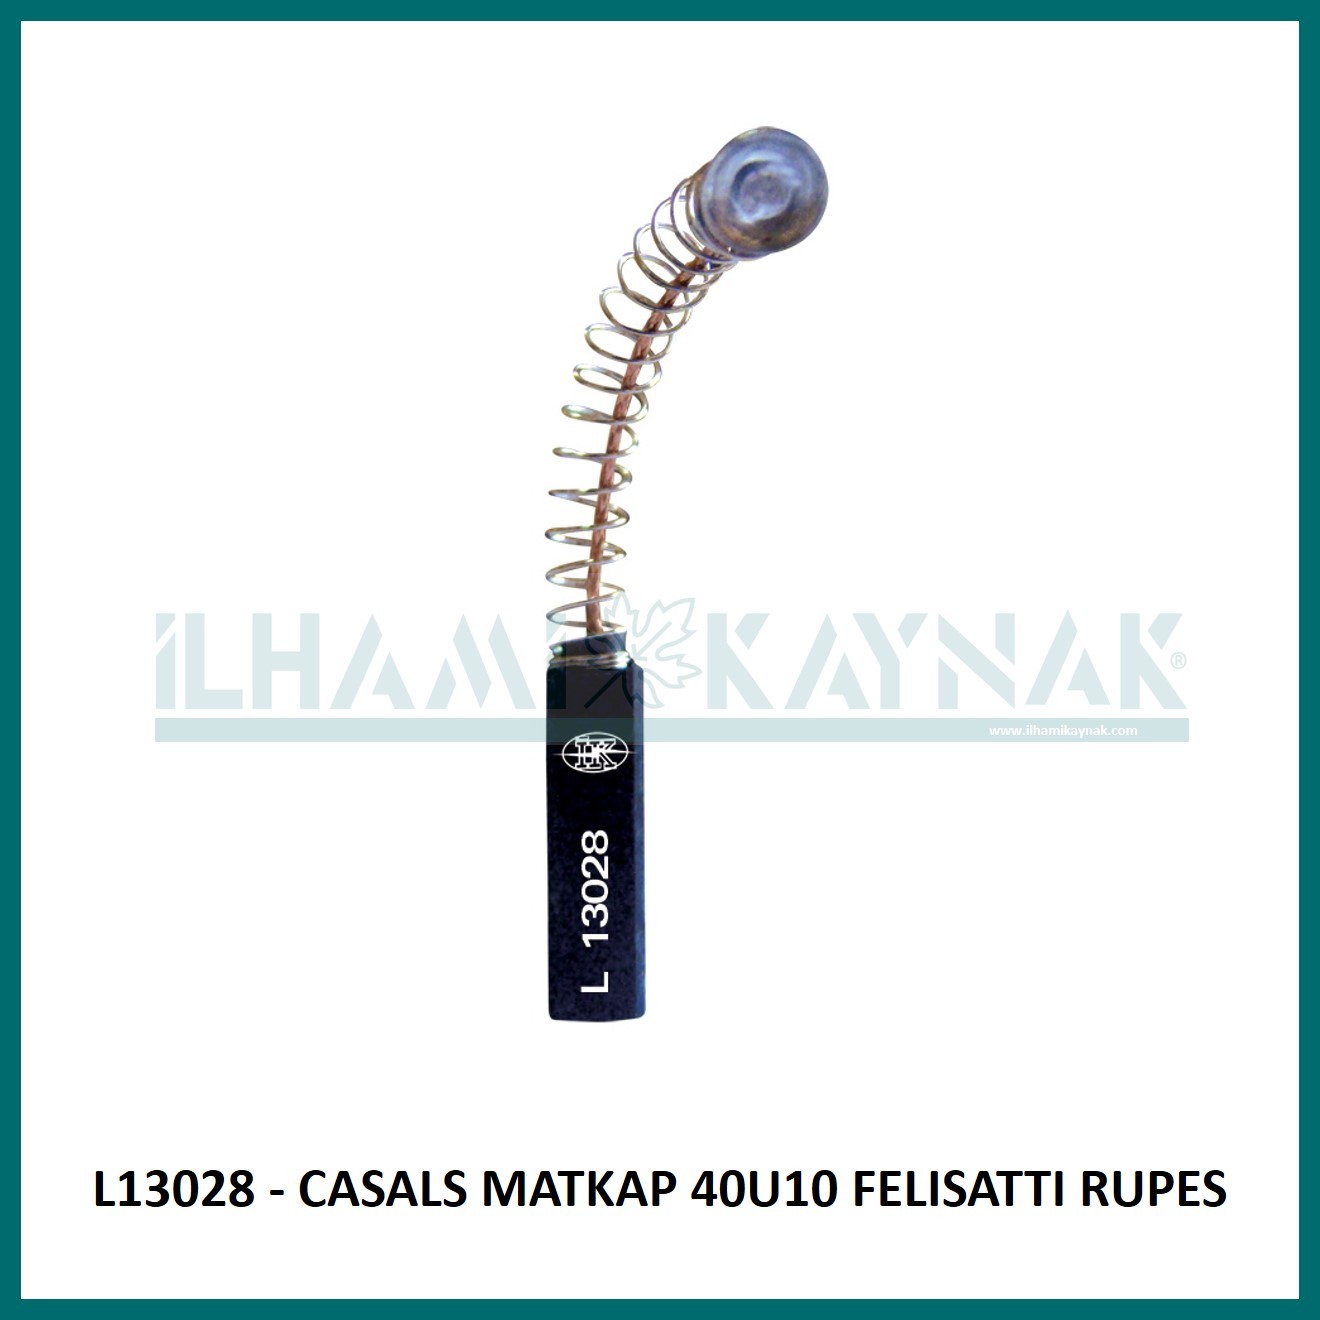 L13028 - CASALS MATKAP 40U10 FELISATTI RUPES STAYER - 6*6*22 mm - Minimum Satın Alım: 10 Adet